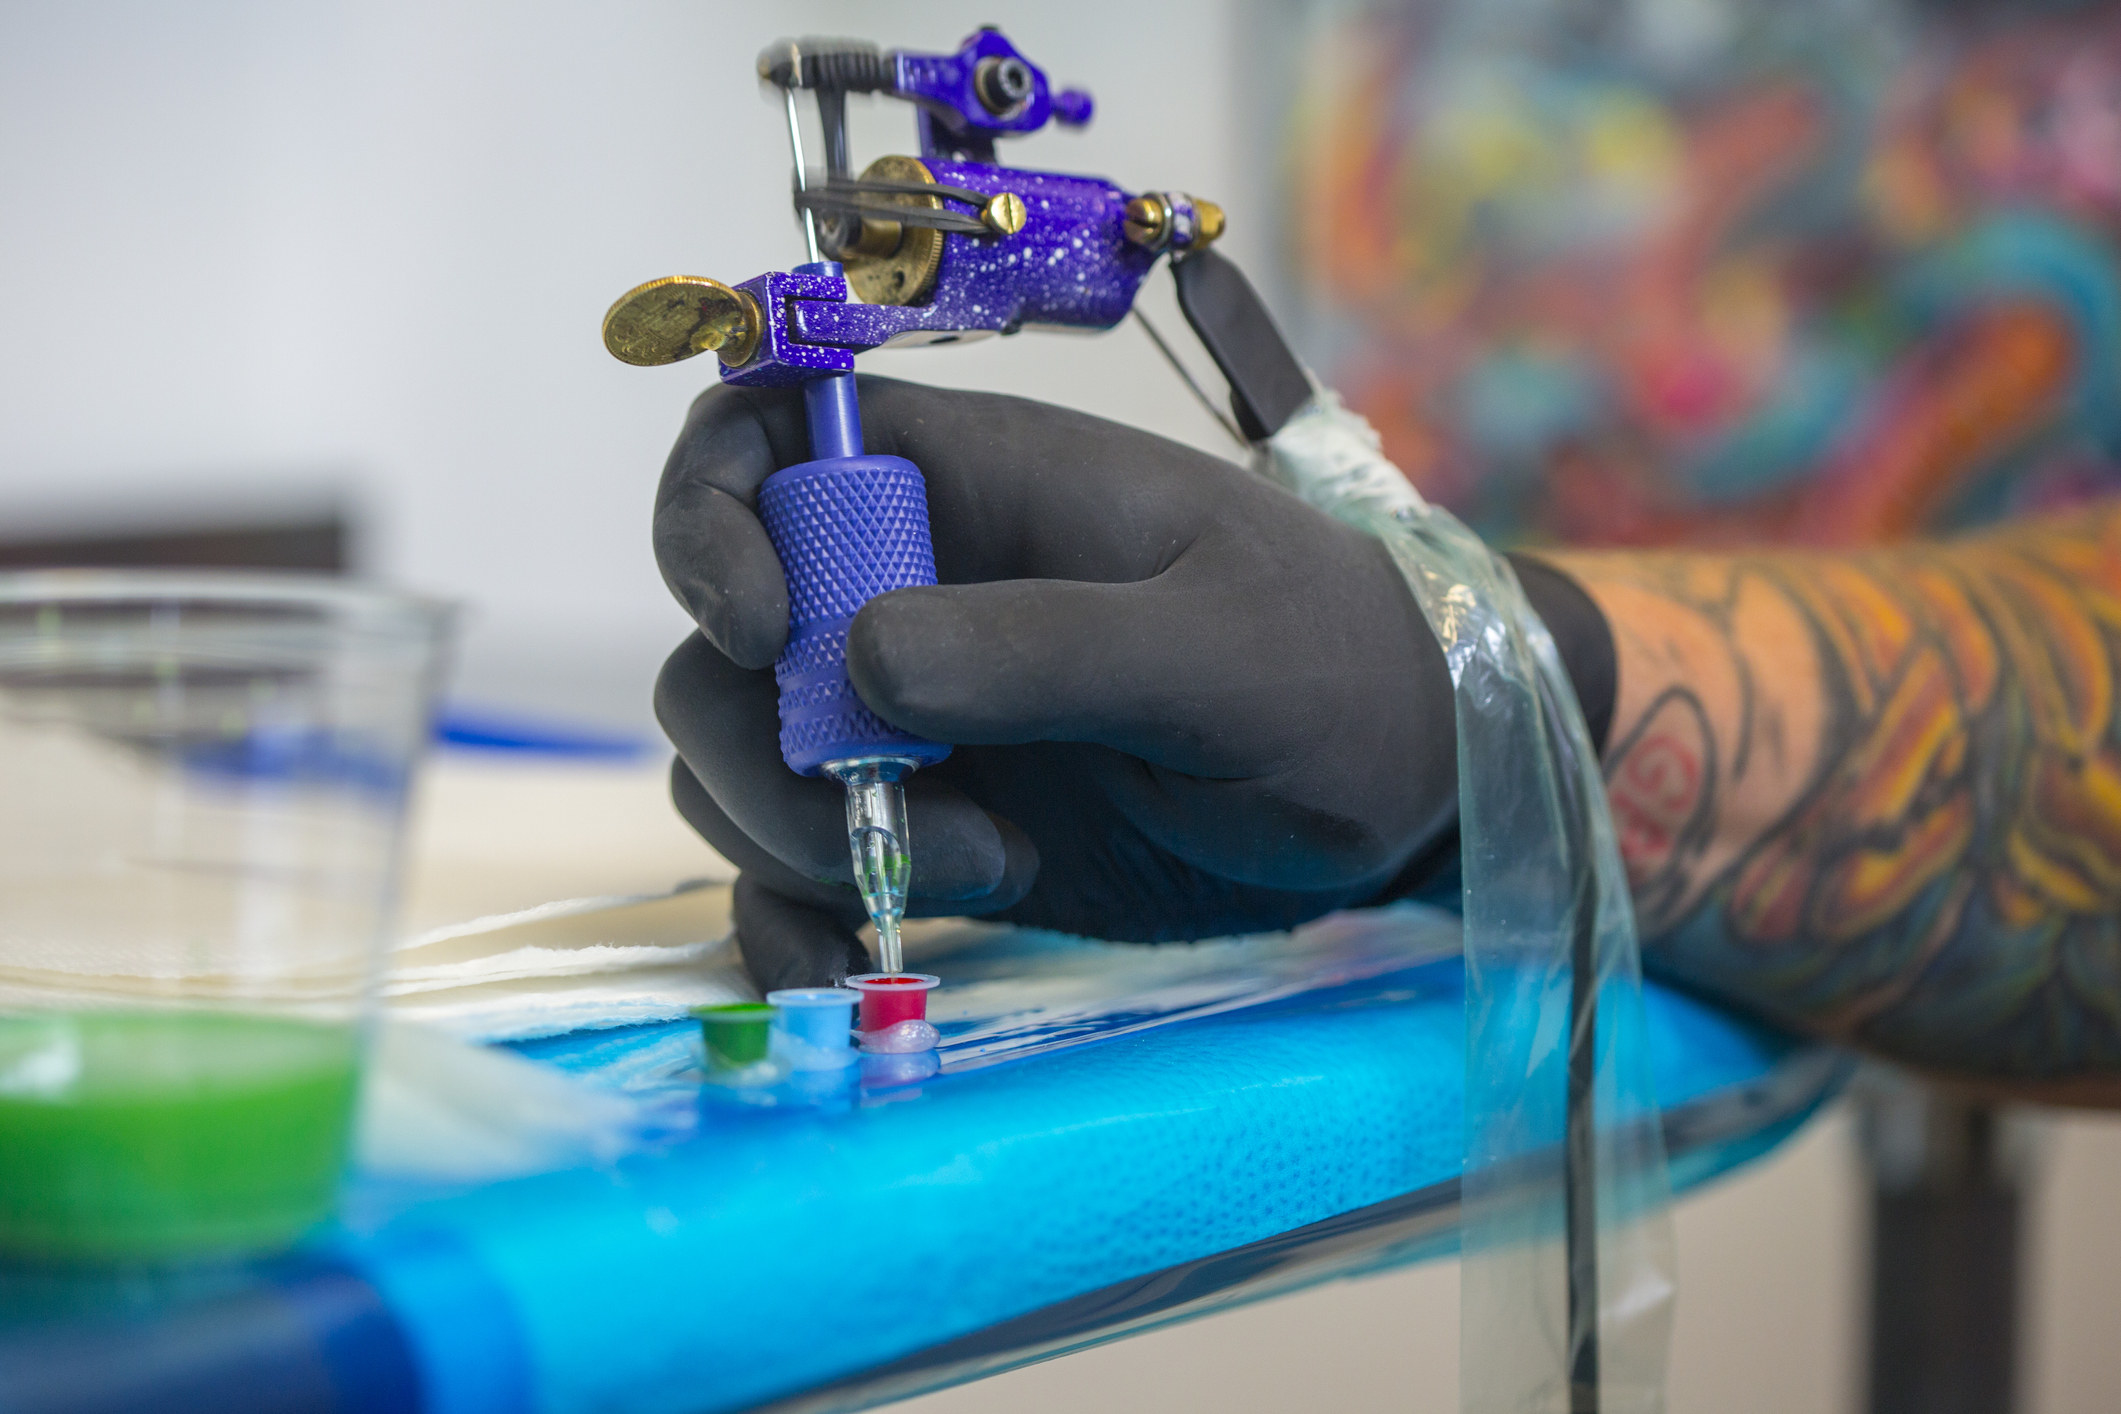 A tattoo artist dipping the gun in ink